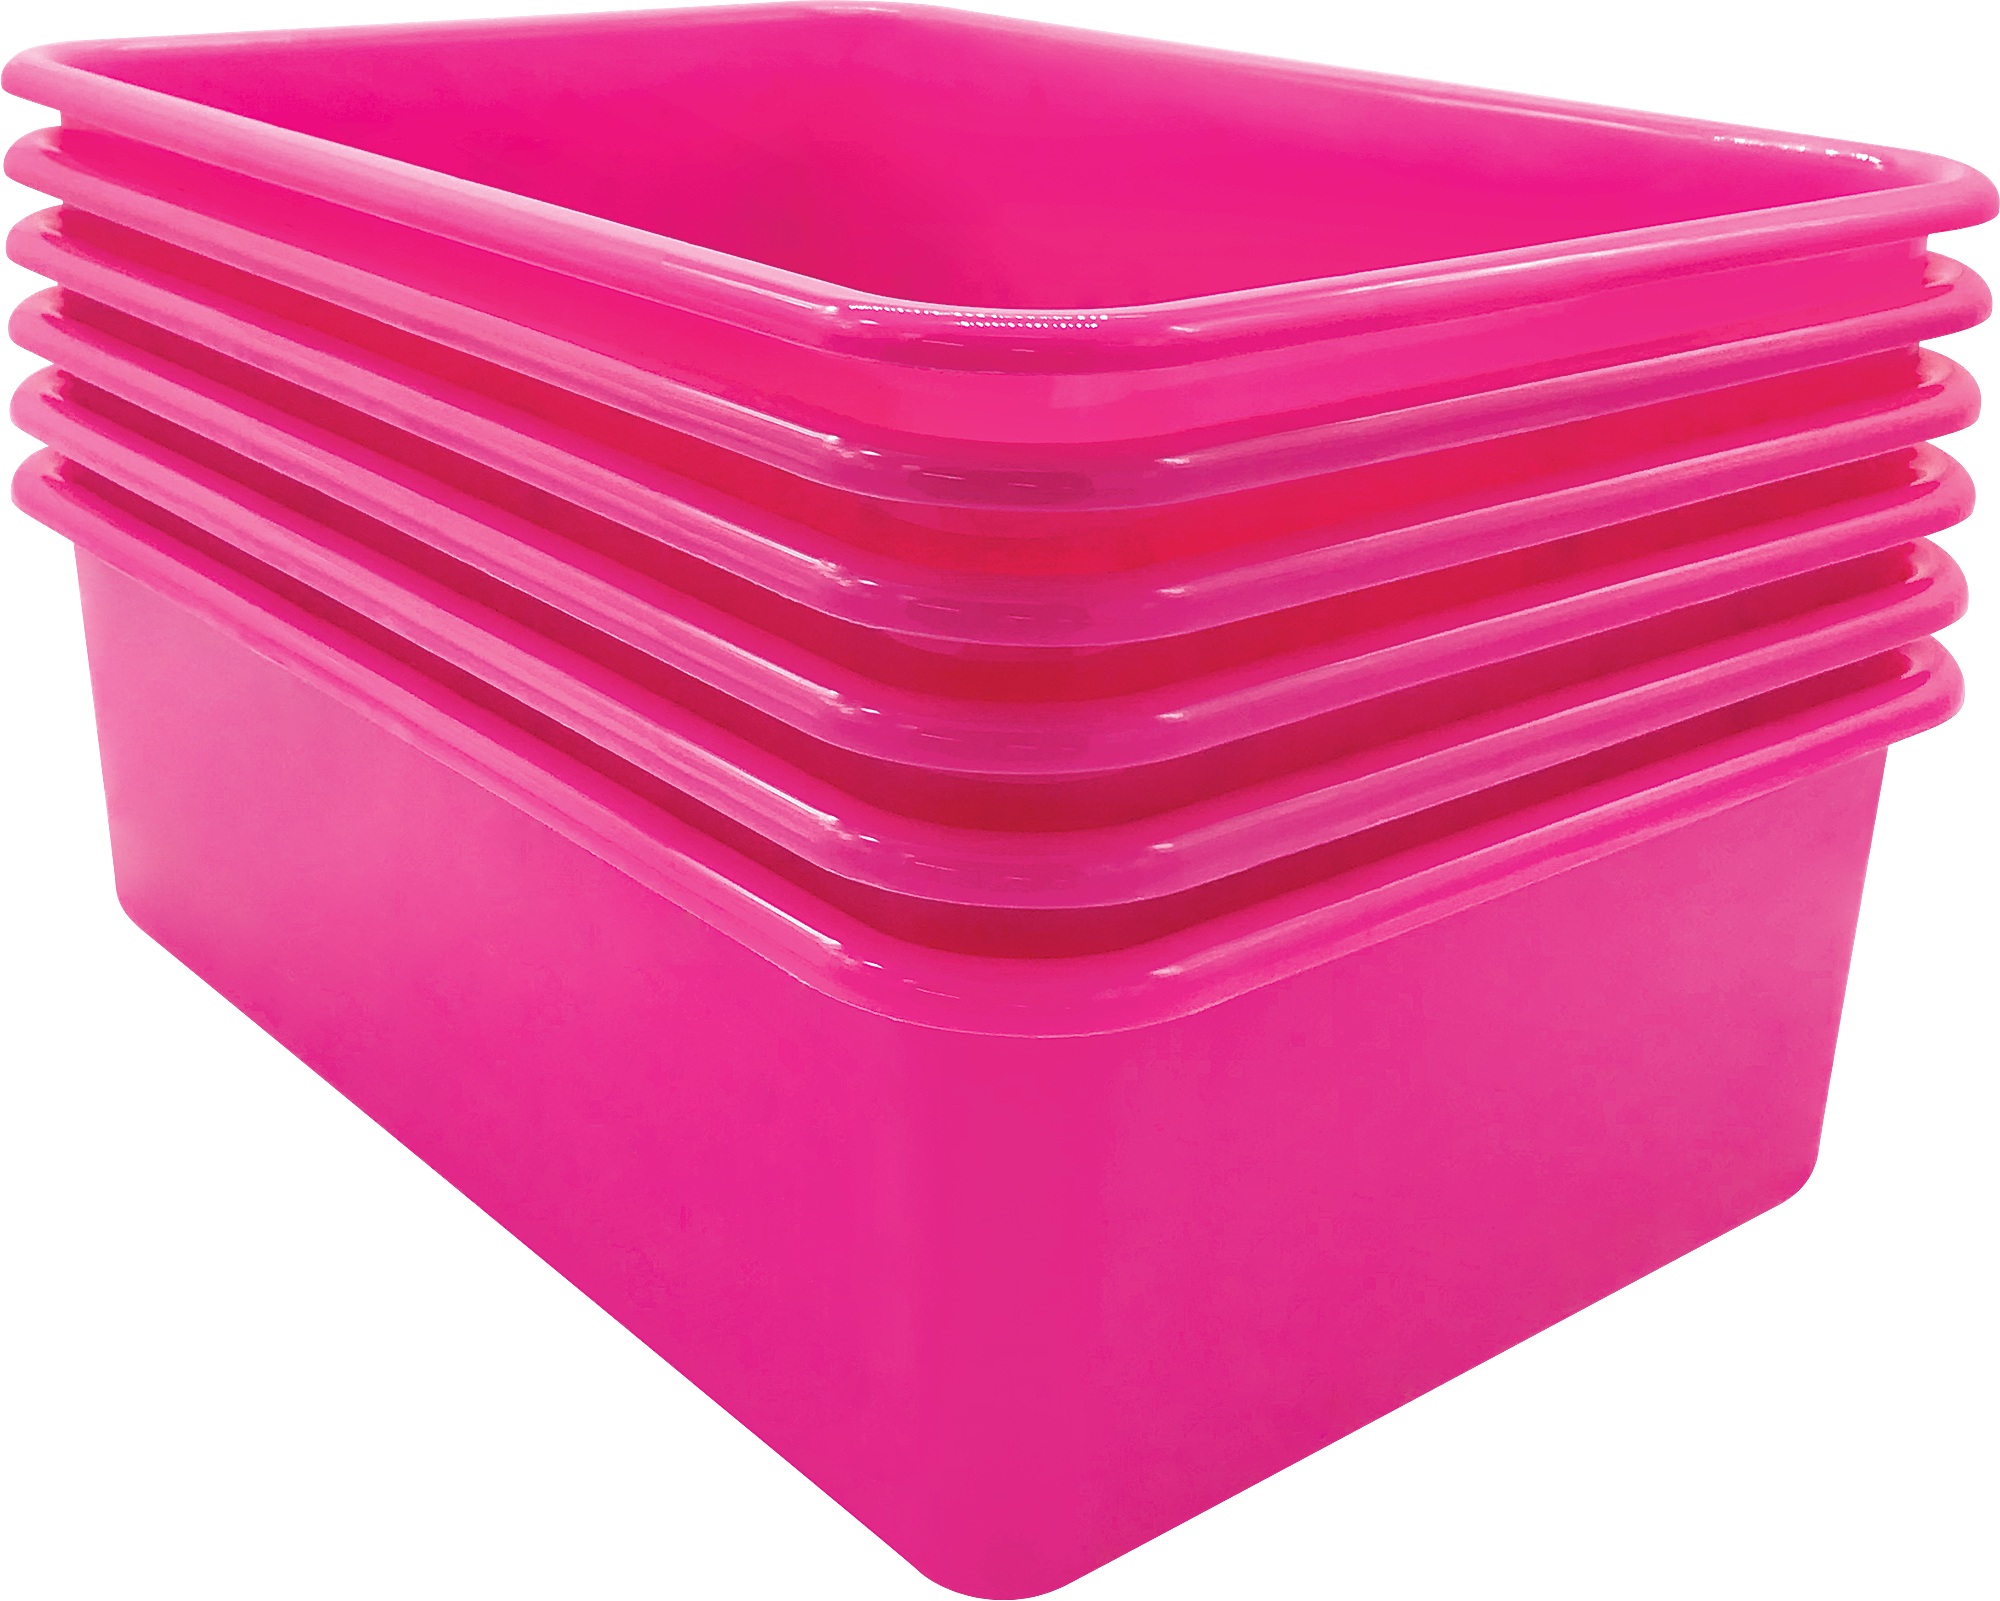 The Teachers' Lounge®  Pink Large Plastic Storage Bin, Pack of 3